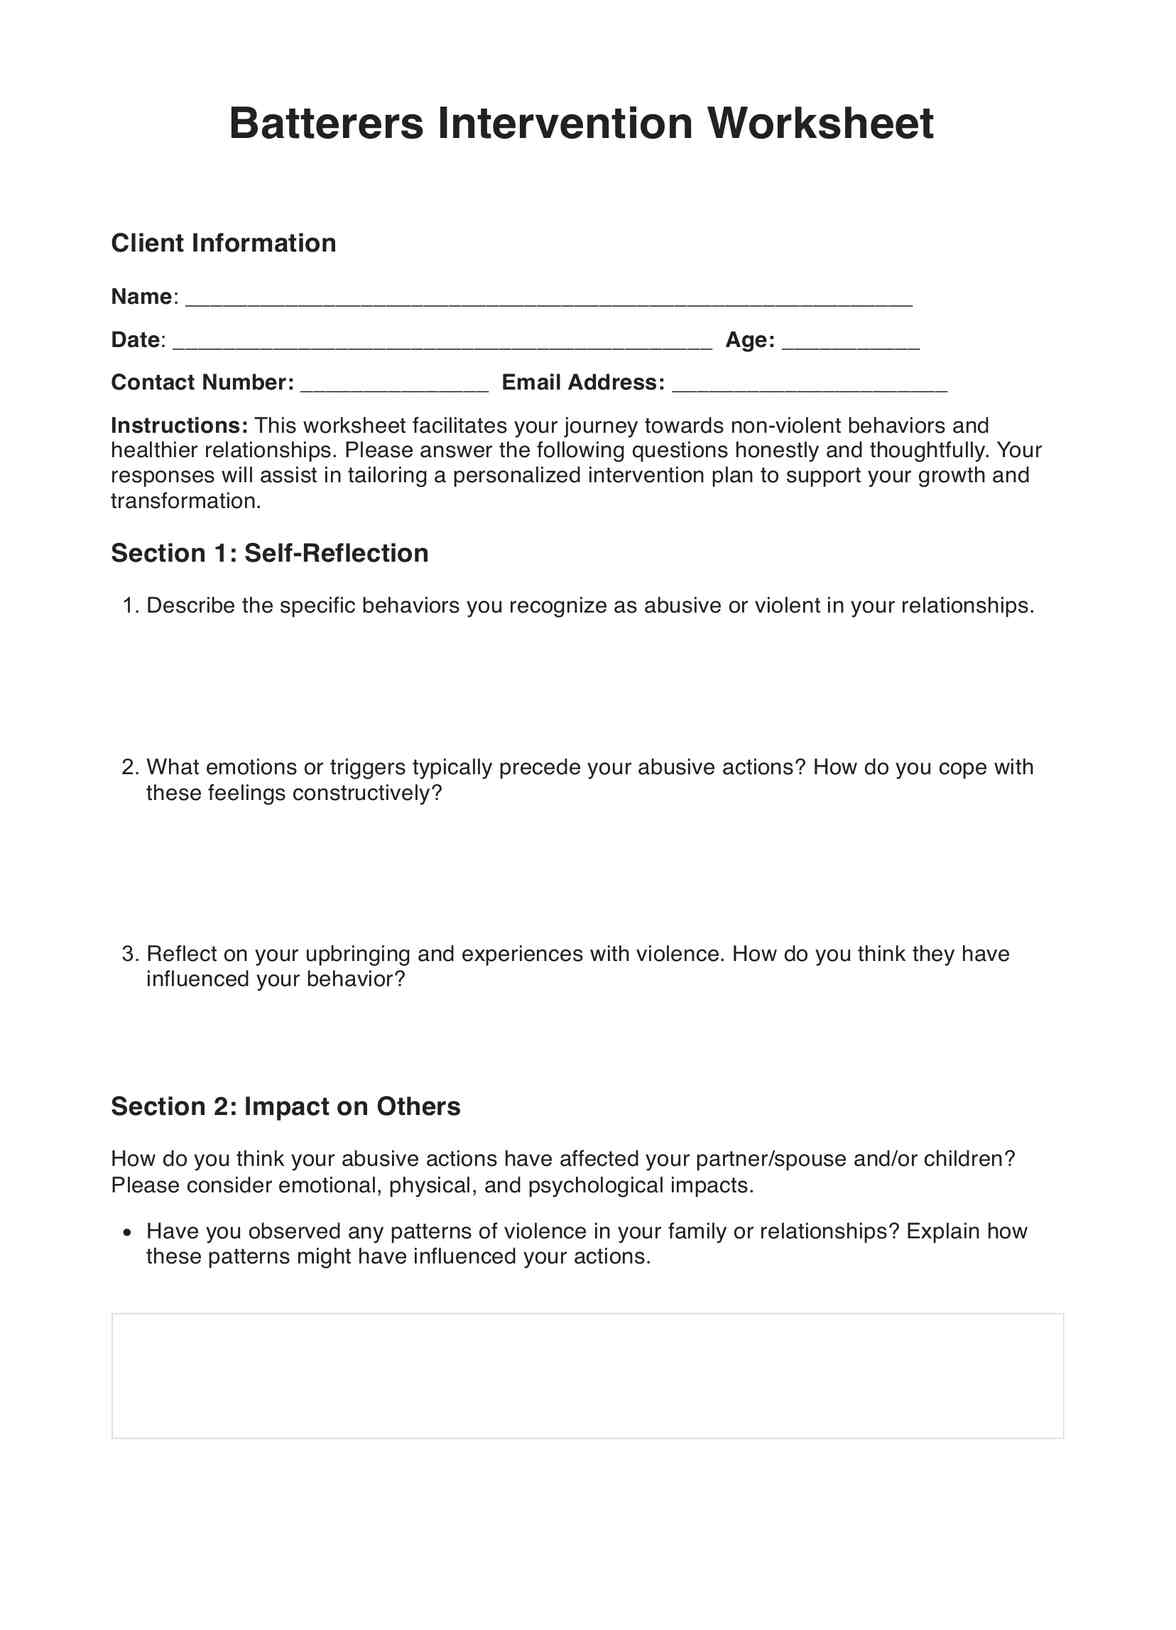 Batterers Intervention Worksheet PDF Example